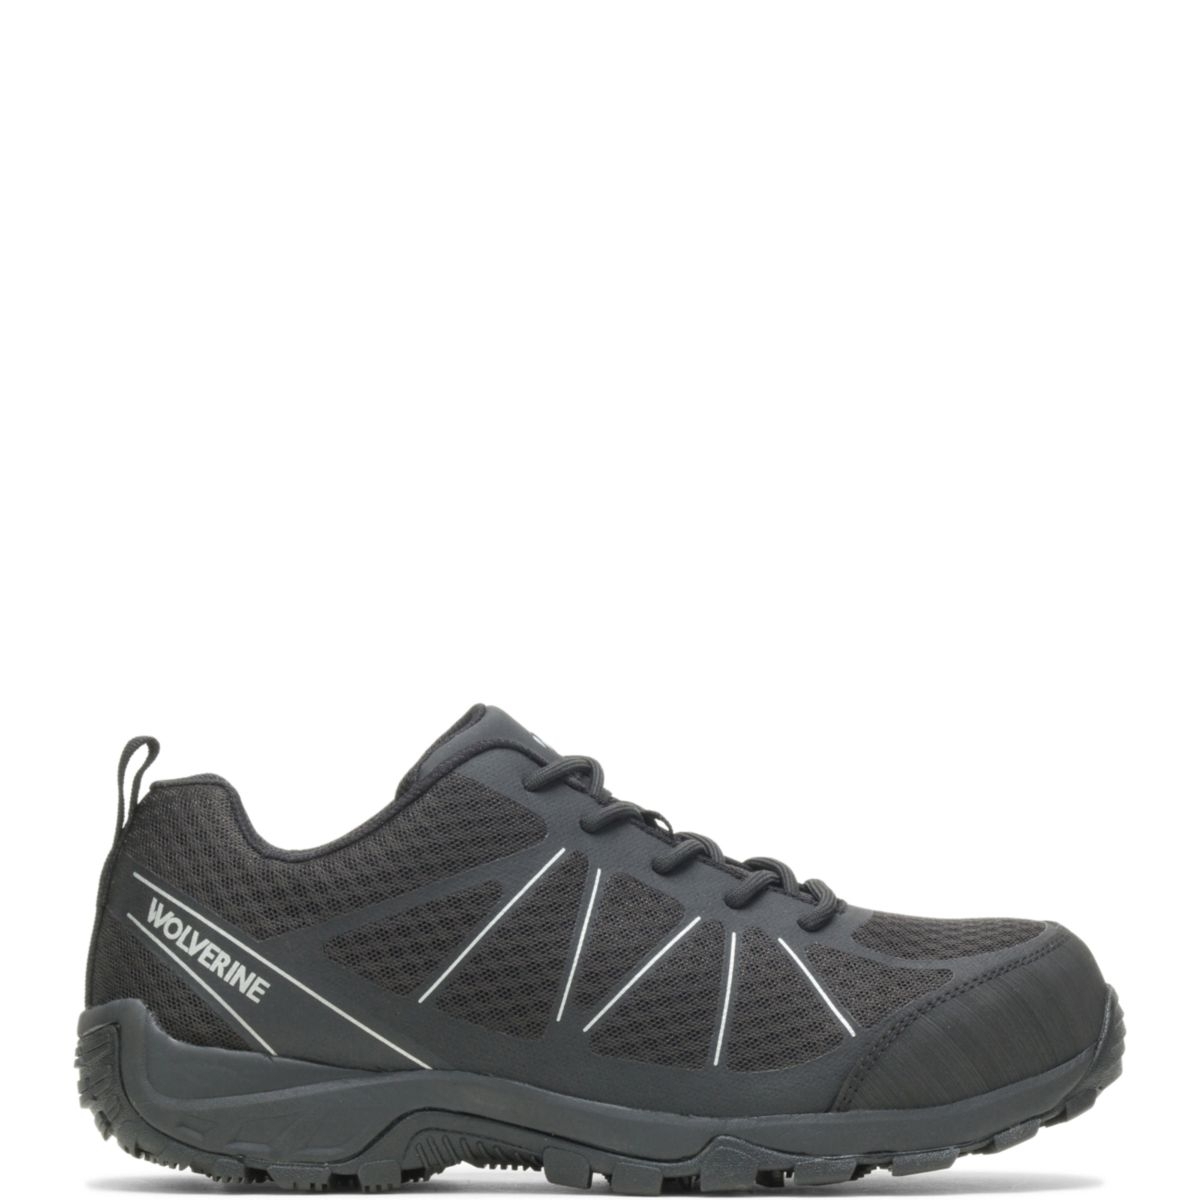 WOLVERINE Men's Amherst II CarbonMAXÂ® Composite Toe Work Shoe Black - W201147 BLACK - BLACK, 9